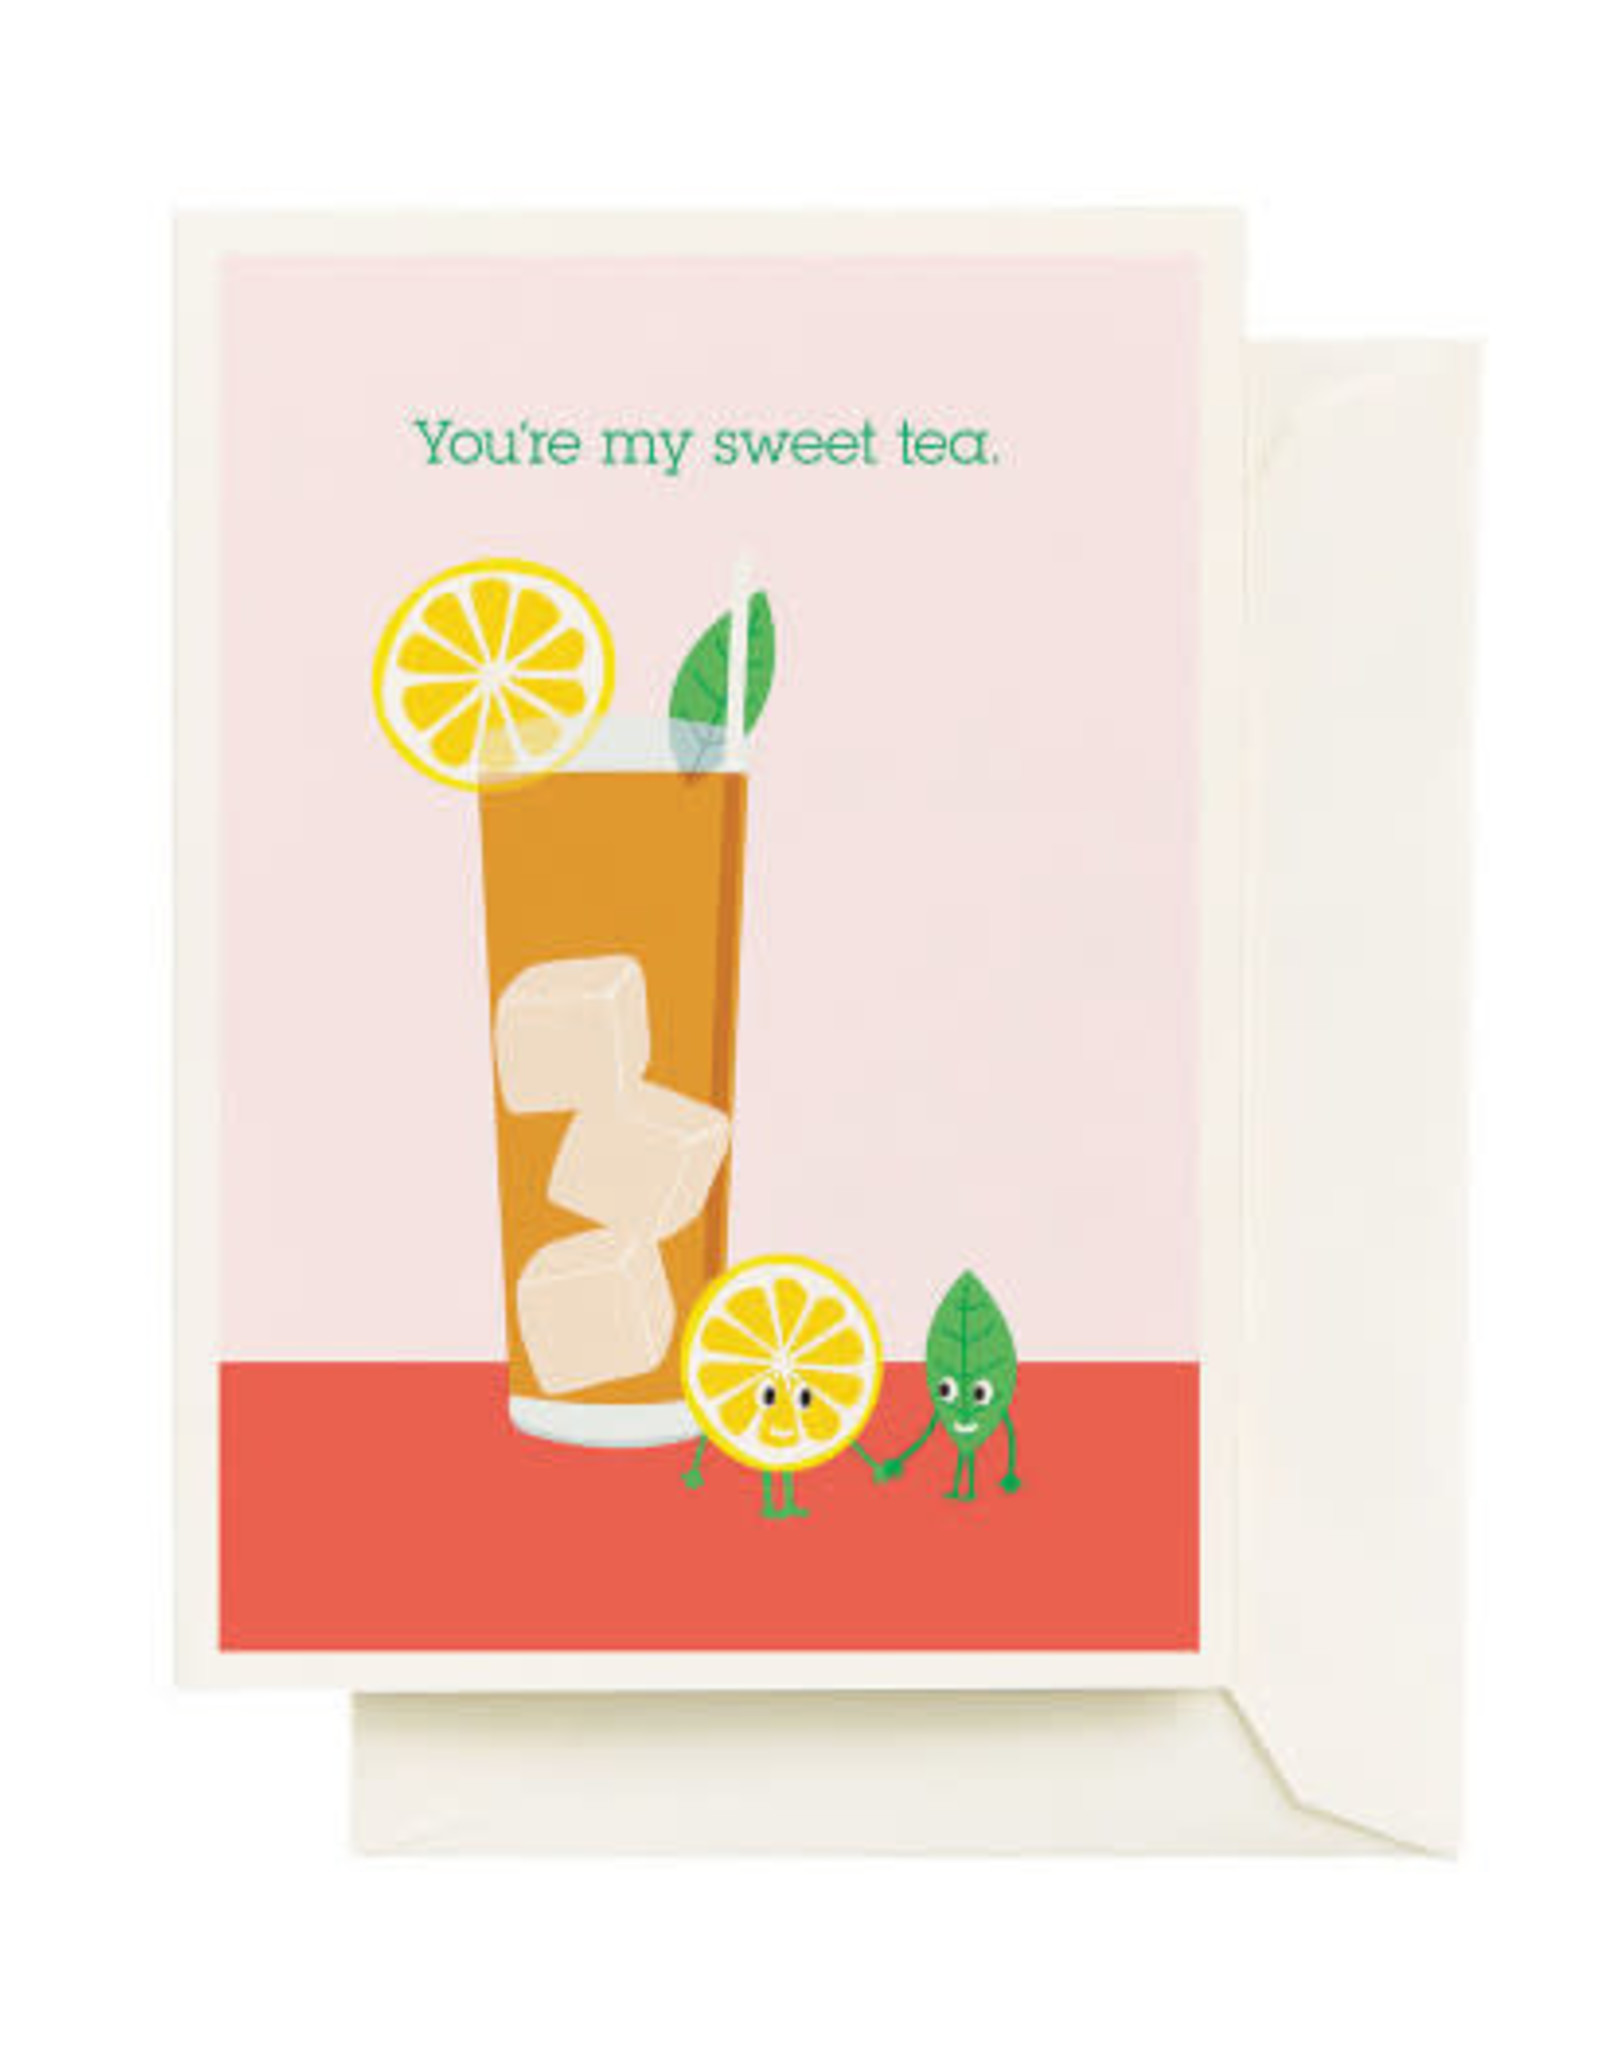 Seltzer "You're My Sweet Tea" Greeting Card - Seltzer